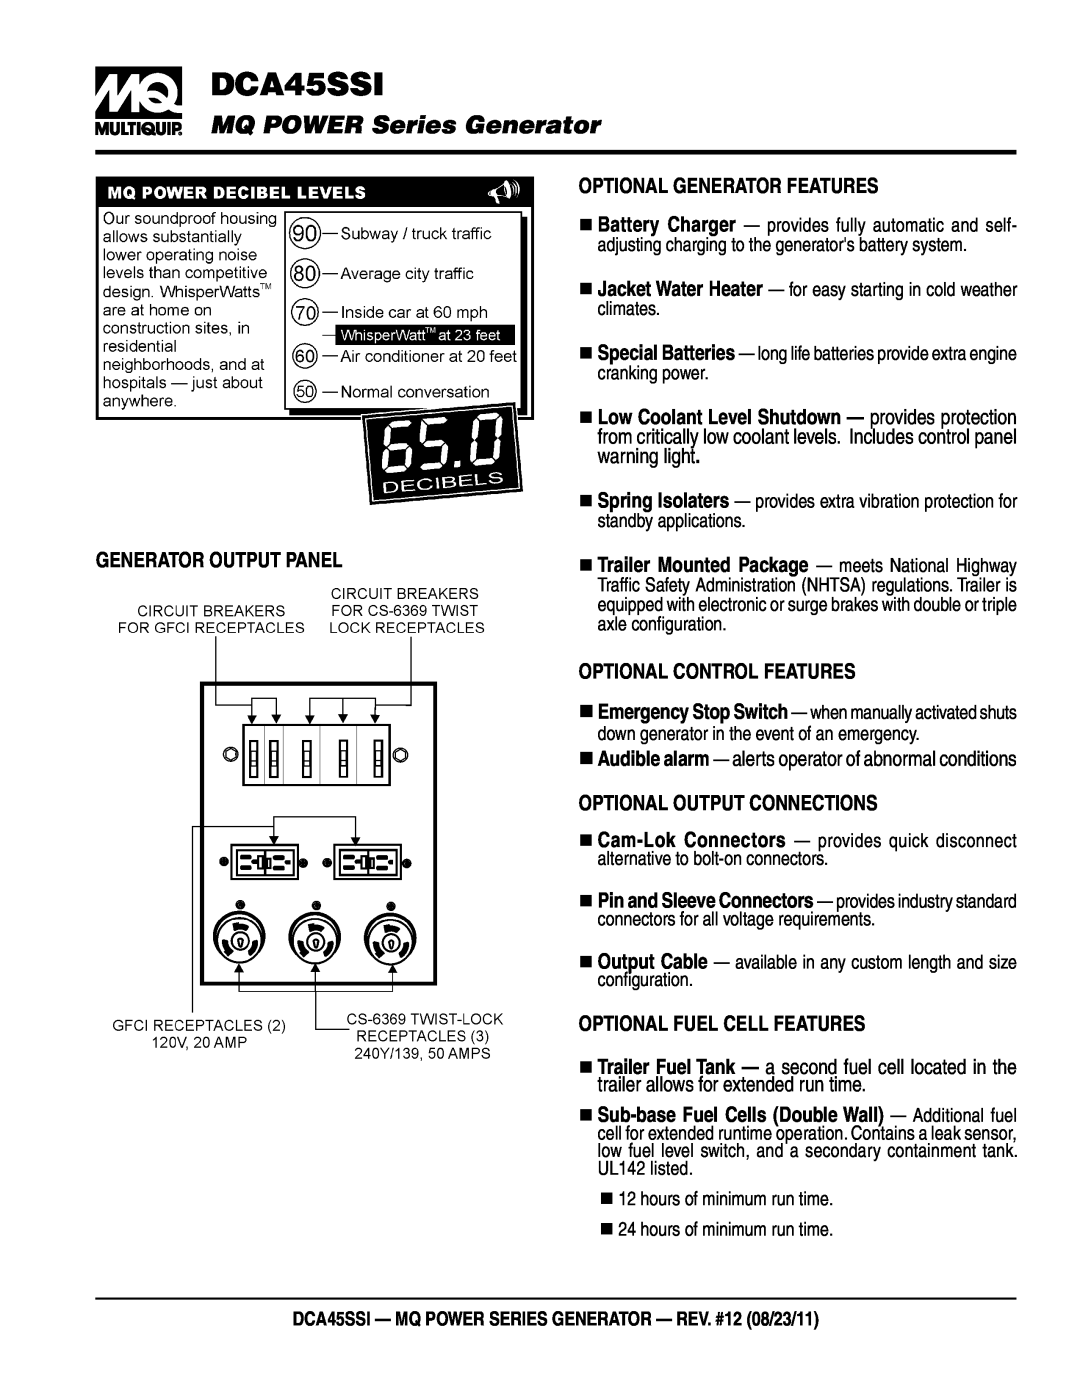 Multiquip DCA45SSI manual Optional Generator Features, warning light, Generator Output Panel, Optional Control Features 